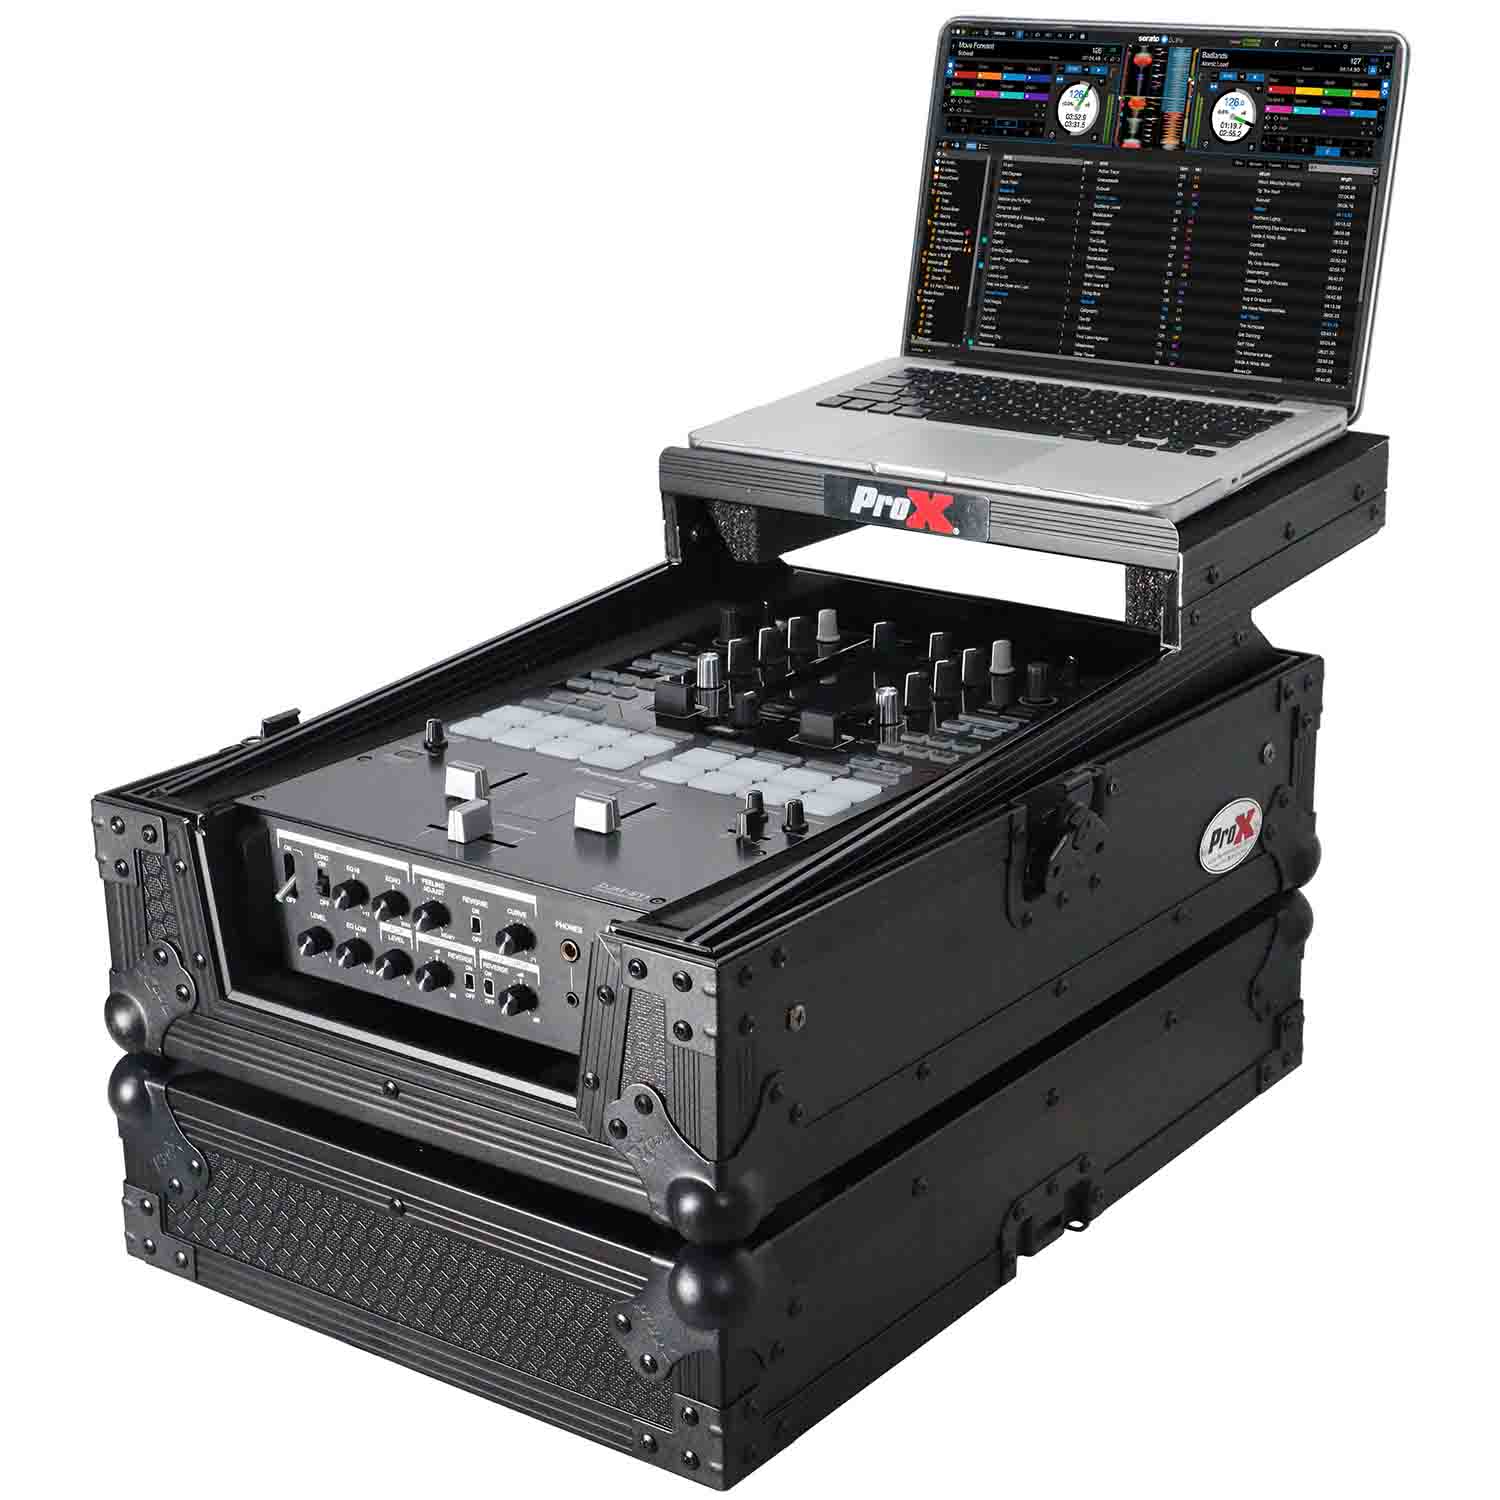 B-Stock: ProX XS-DJMS11LTBL, Flight Case for Pioneer DJM-S11 Mixer with Sliding Laptop Shelf - Black on Black by ProX Cases